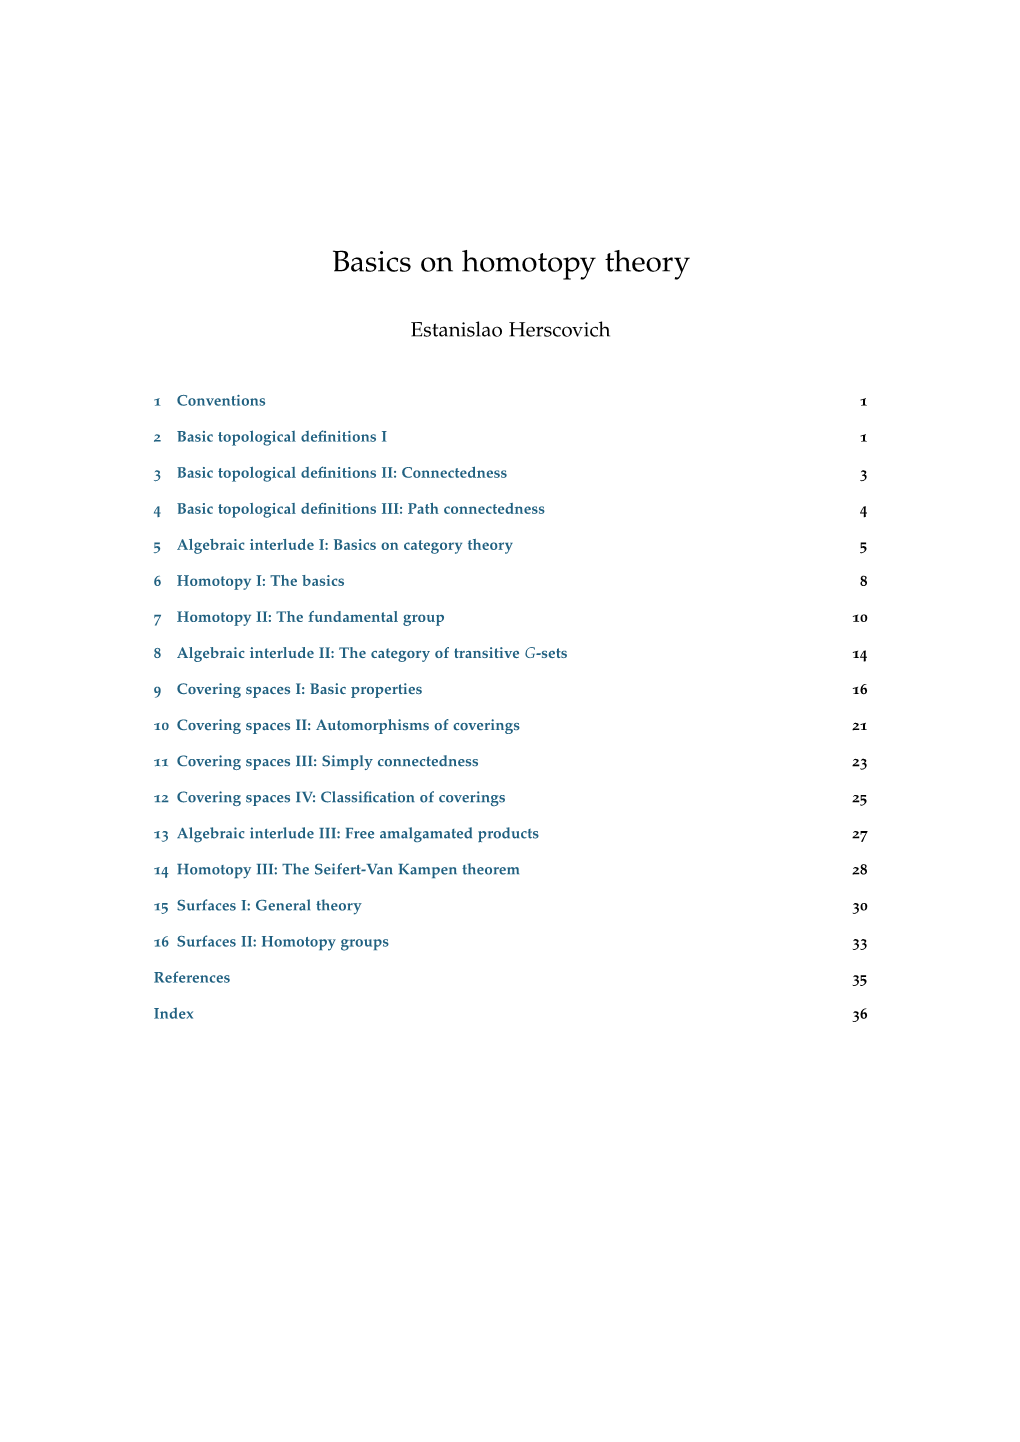 Basics on Homotopy Theory